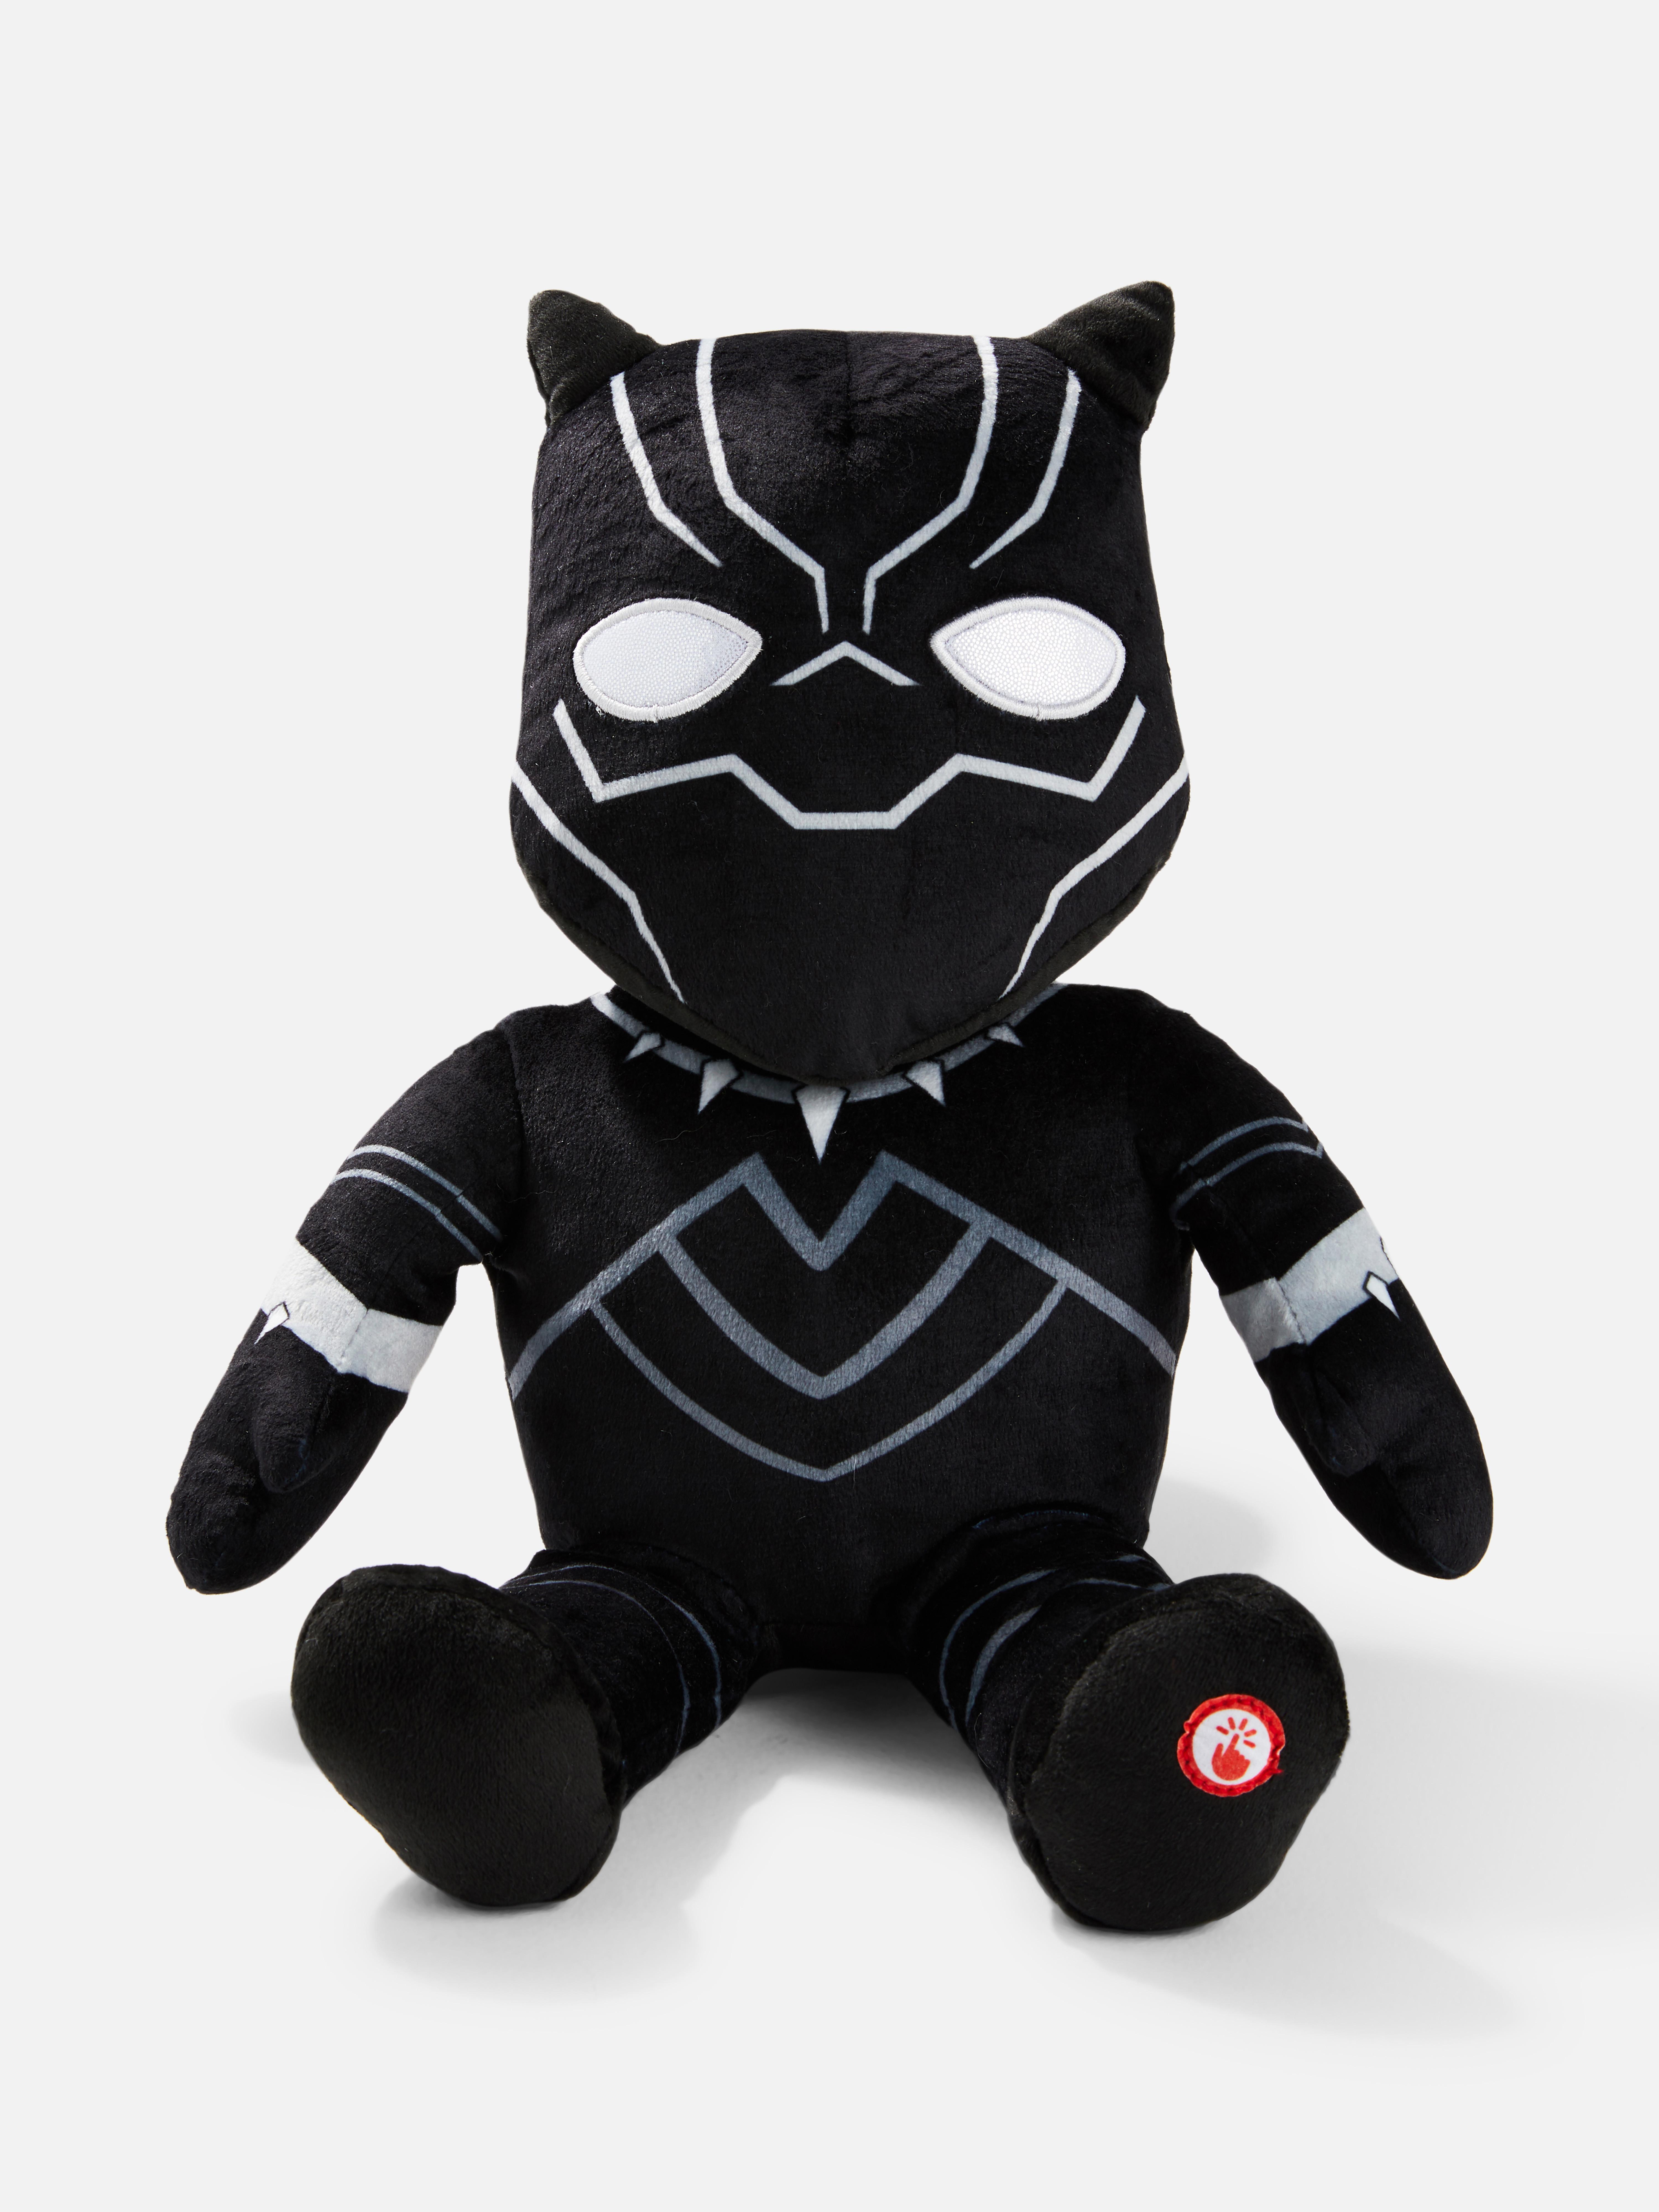 Marvel Black Panther Large Plush Toy